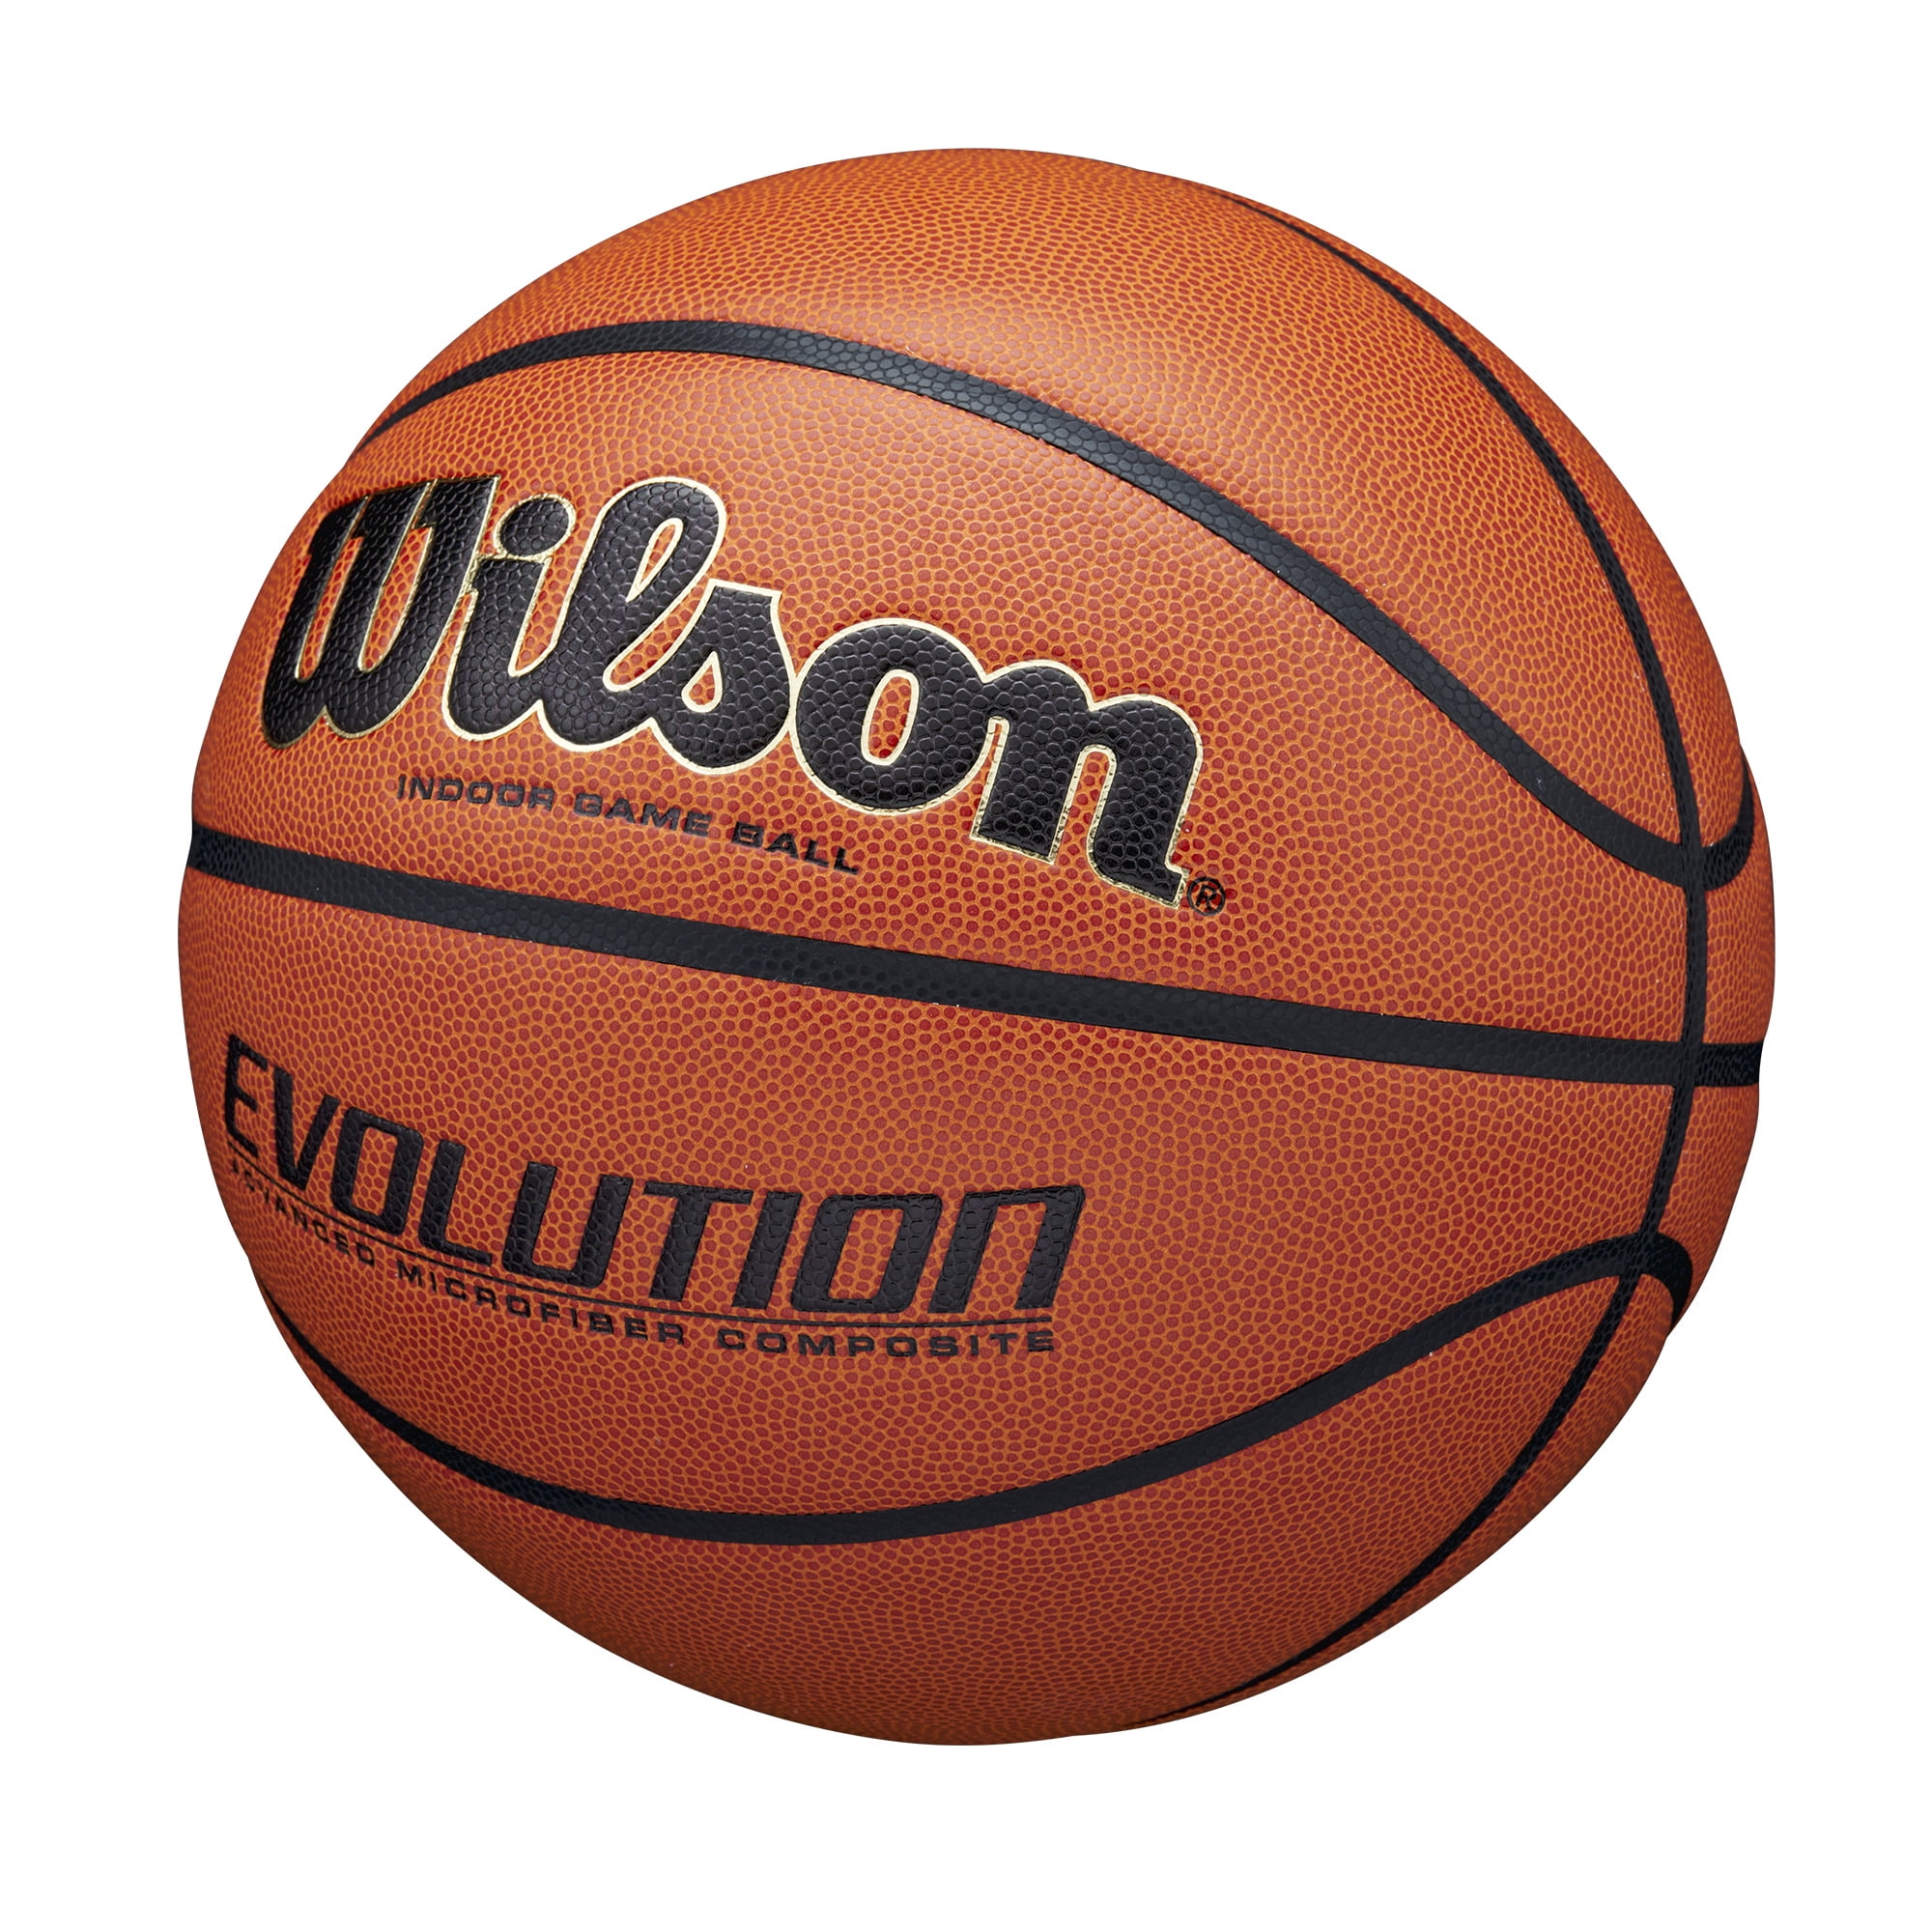 29.5" Wilson Evolution Official Game Basketball 